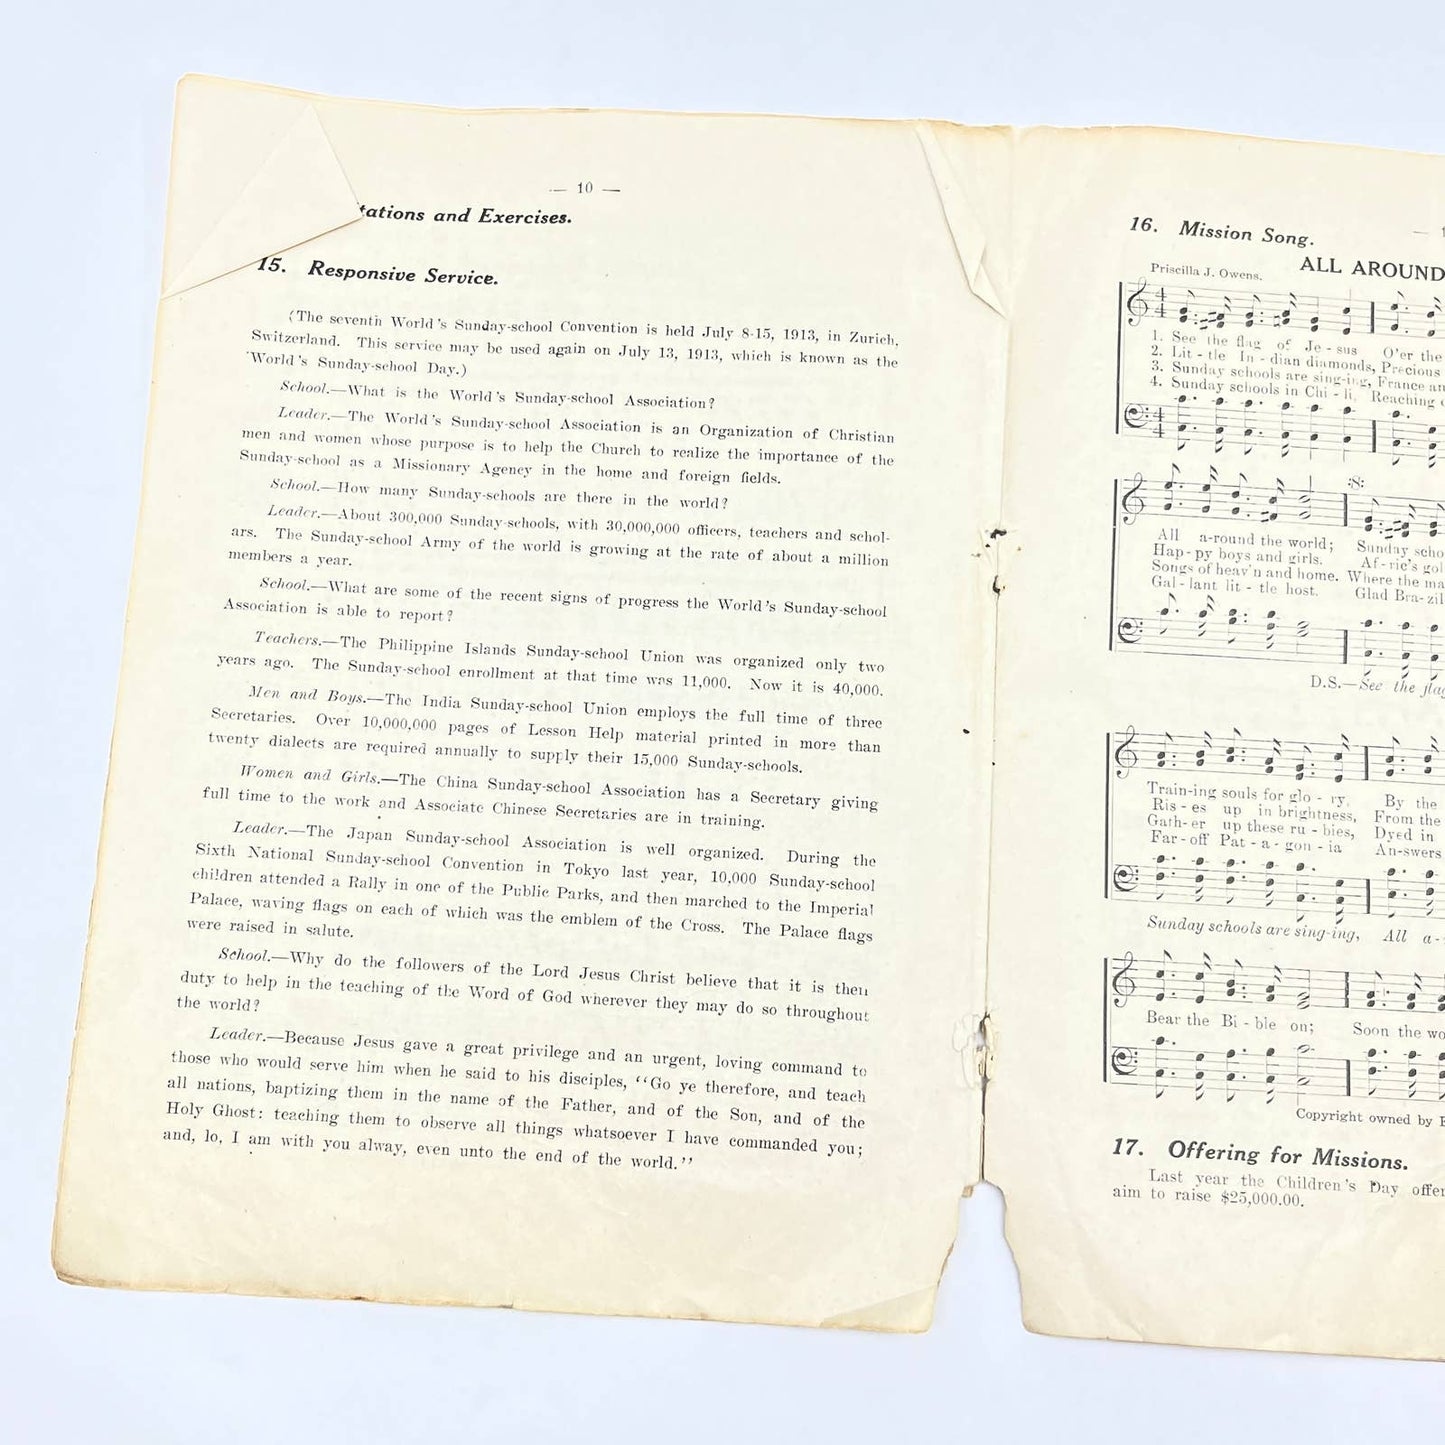 1913 Hosannas to Jesus Christian Sheet Music Booklet Cleveland OH TG2